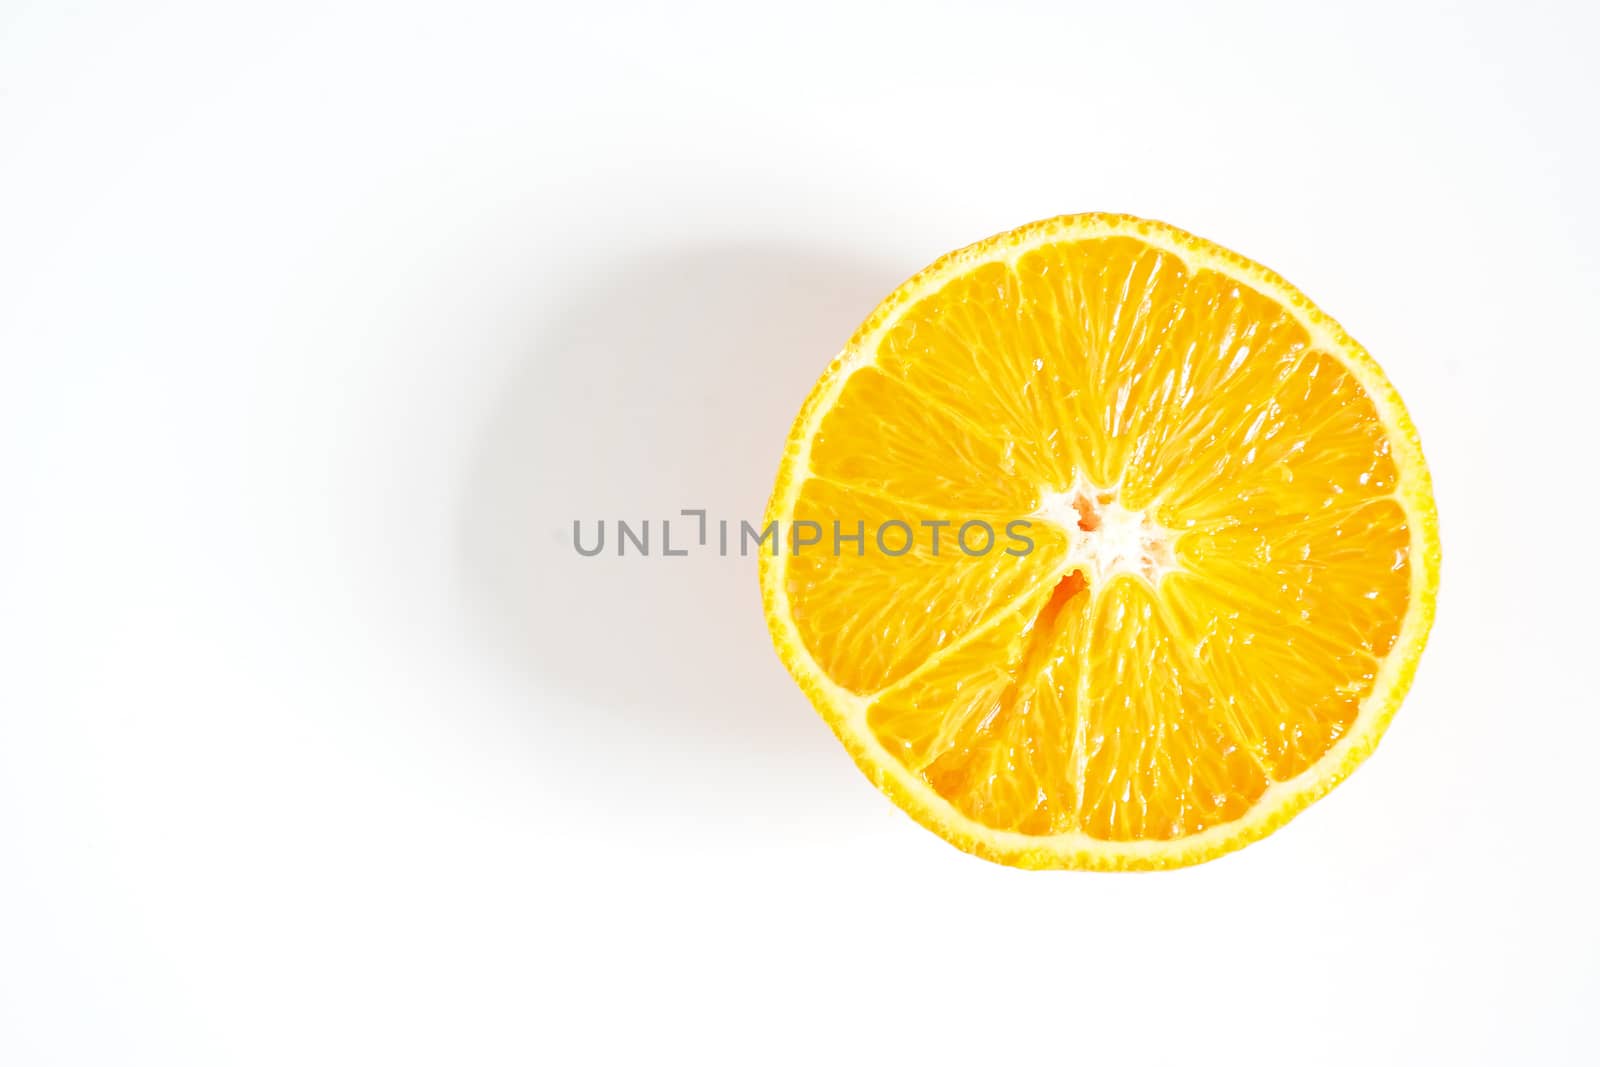 An orange sliced in half against a plain white background